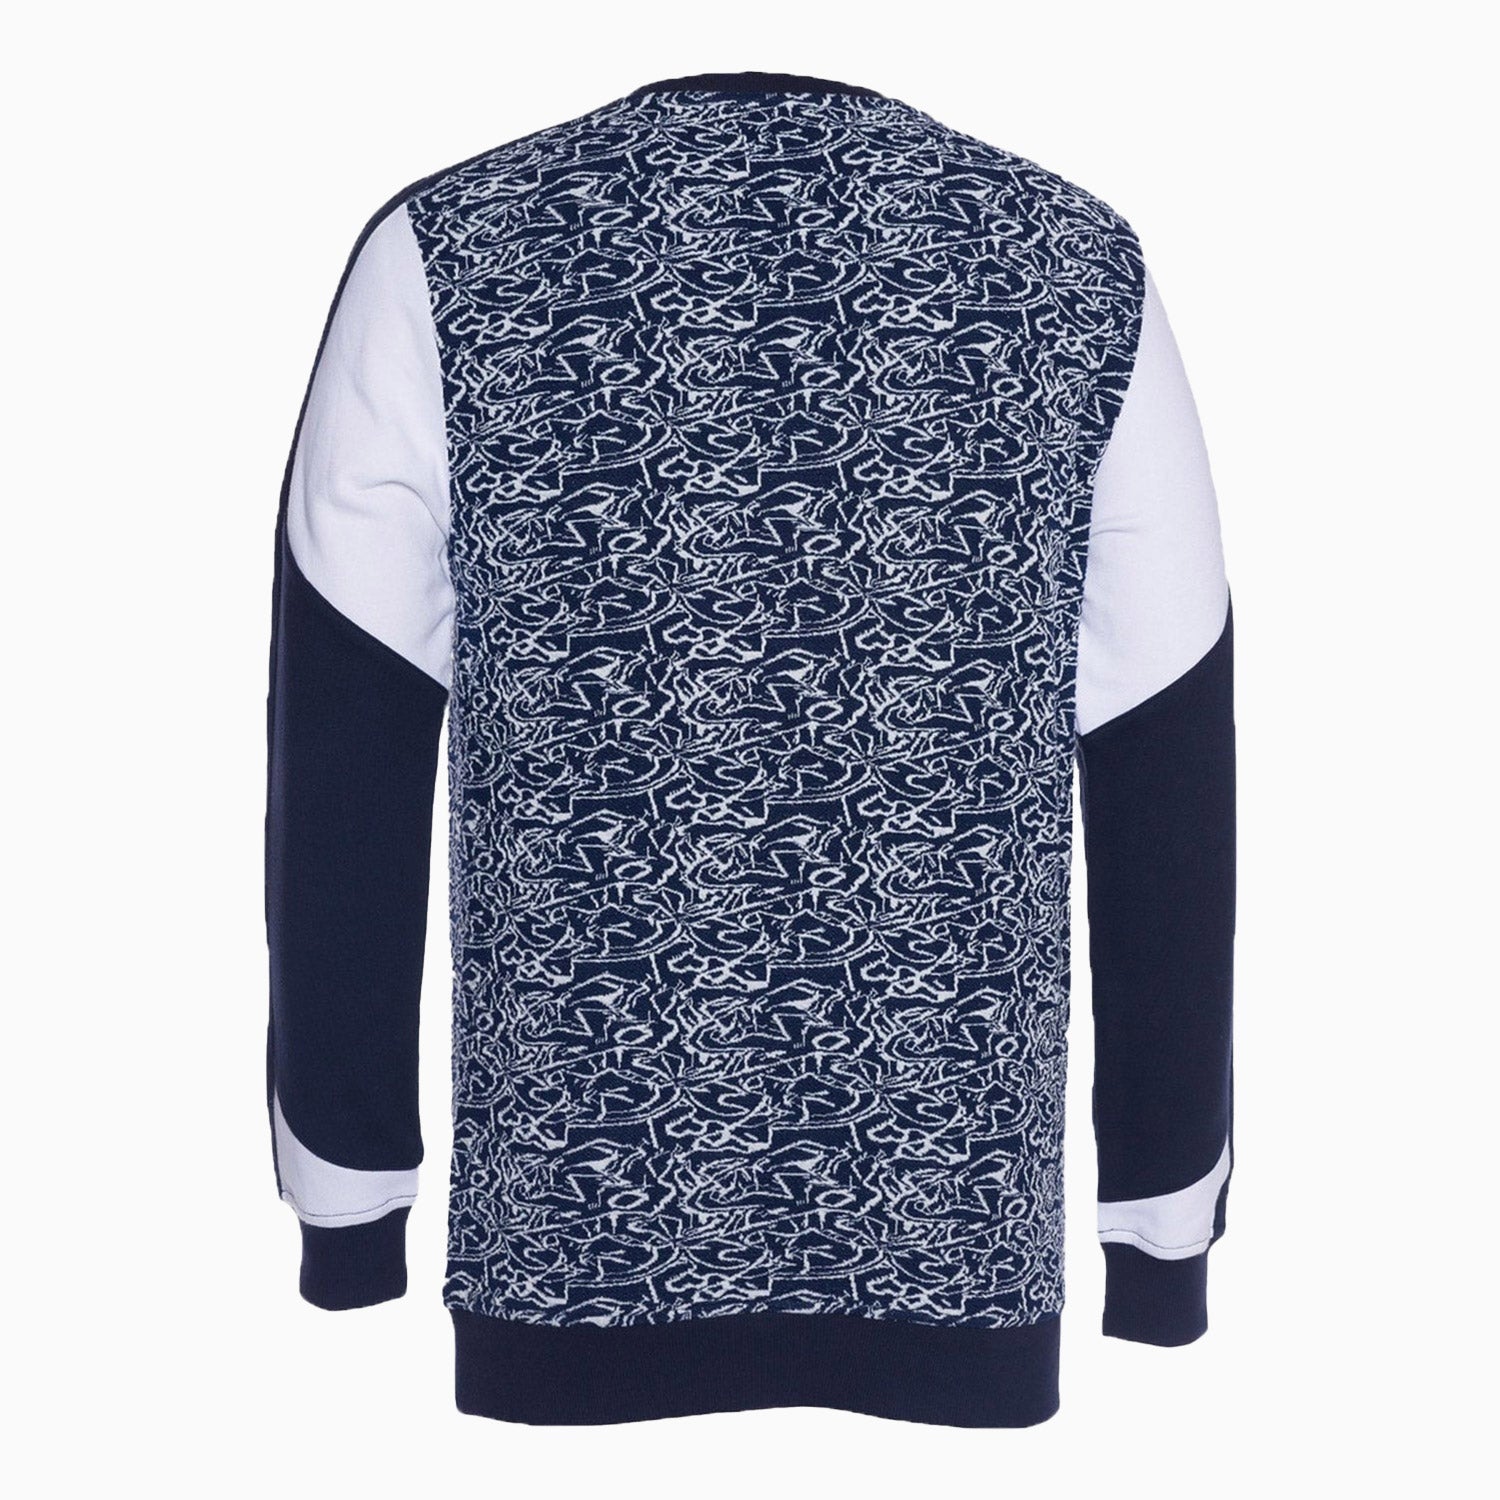 a-tiziano-mens-camden-fancy-knit-sweatshirt-31atm4006-navy